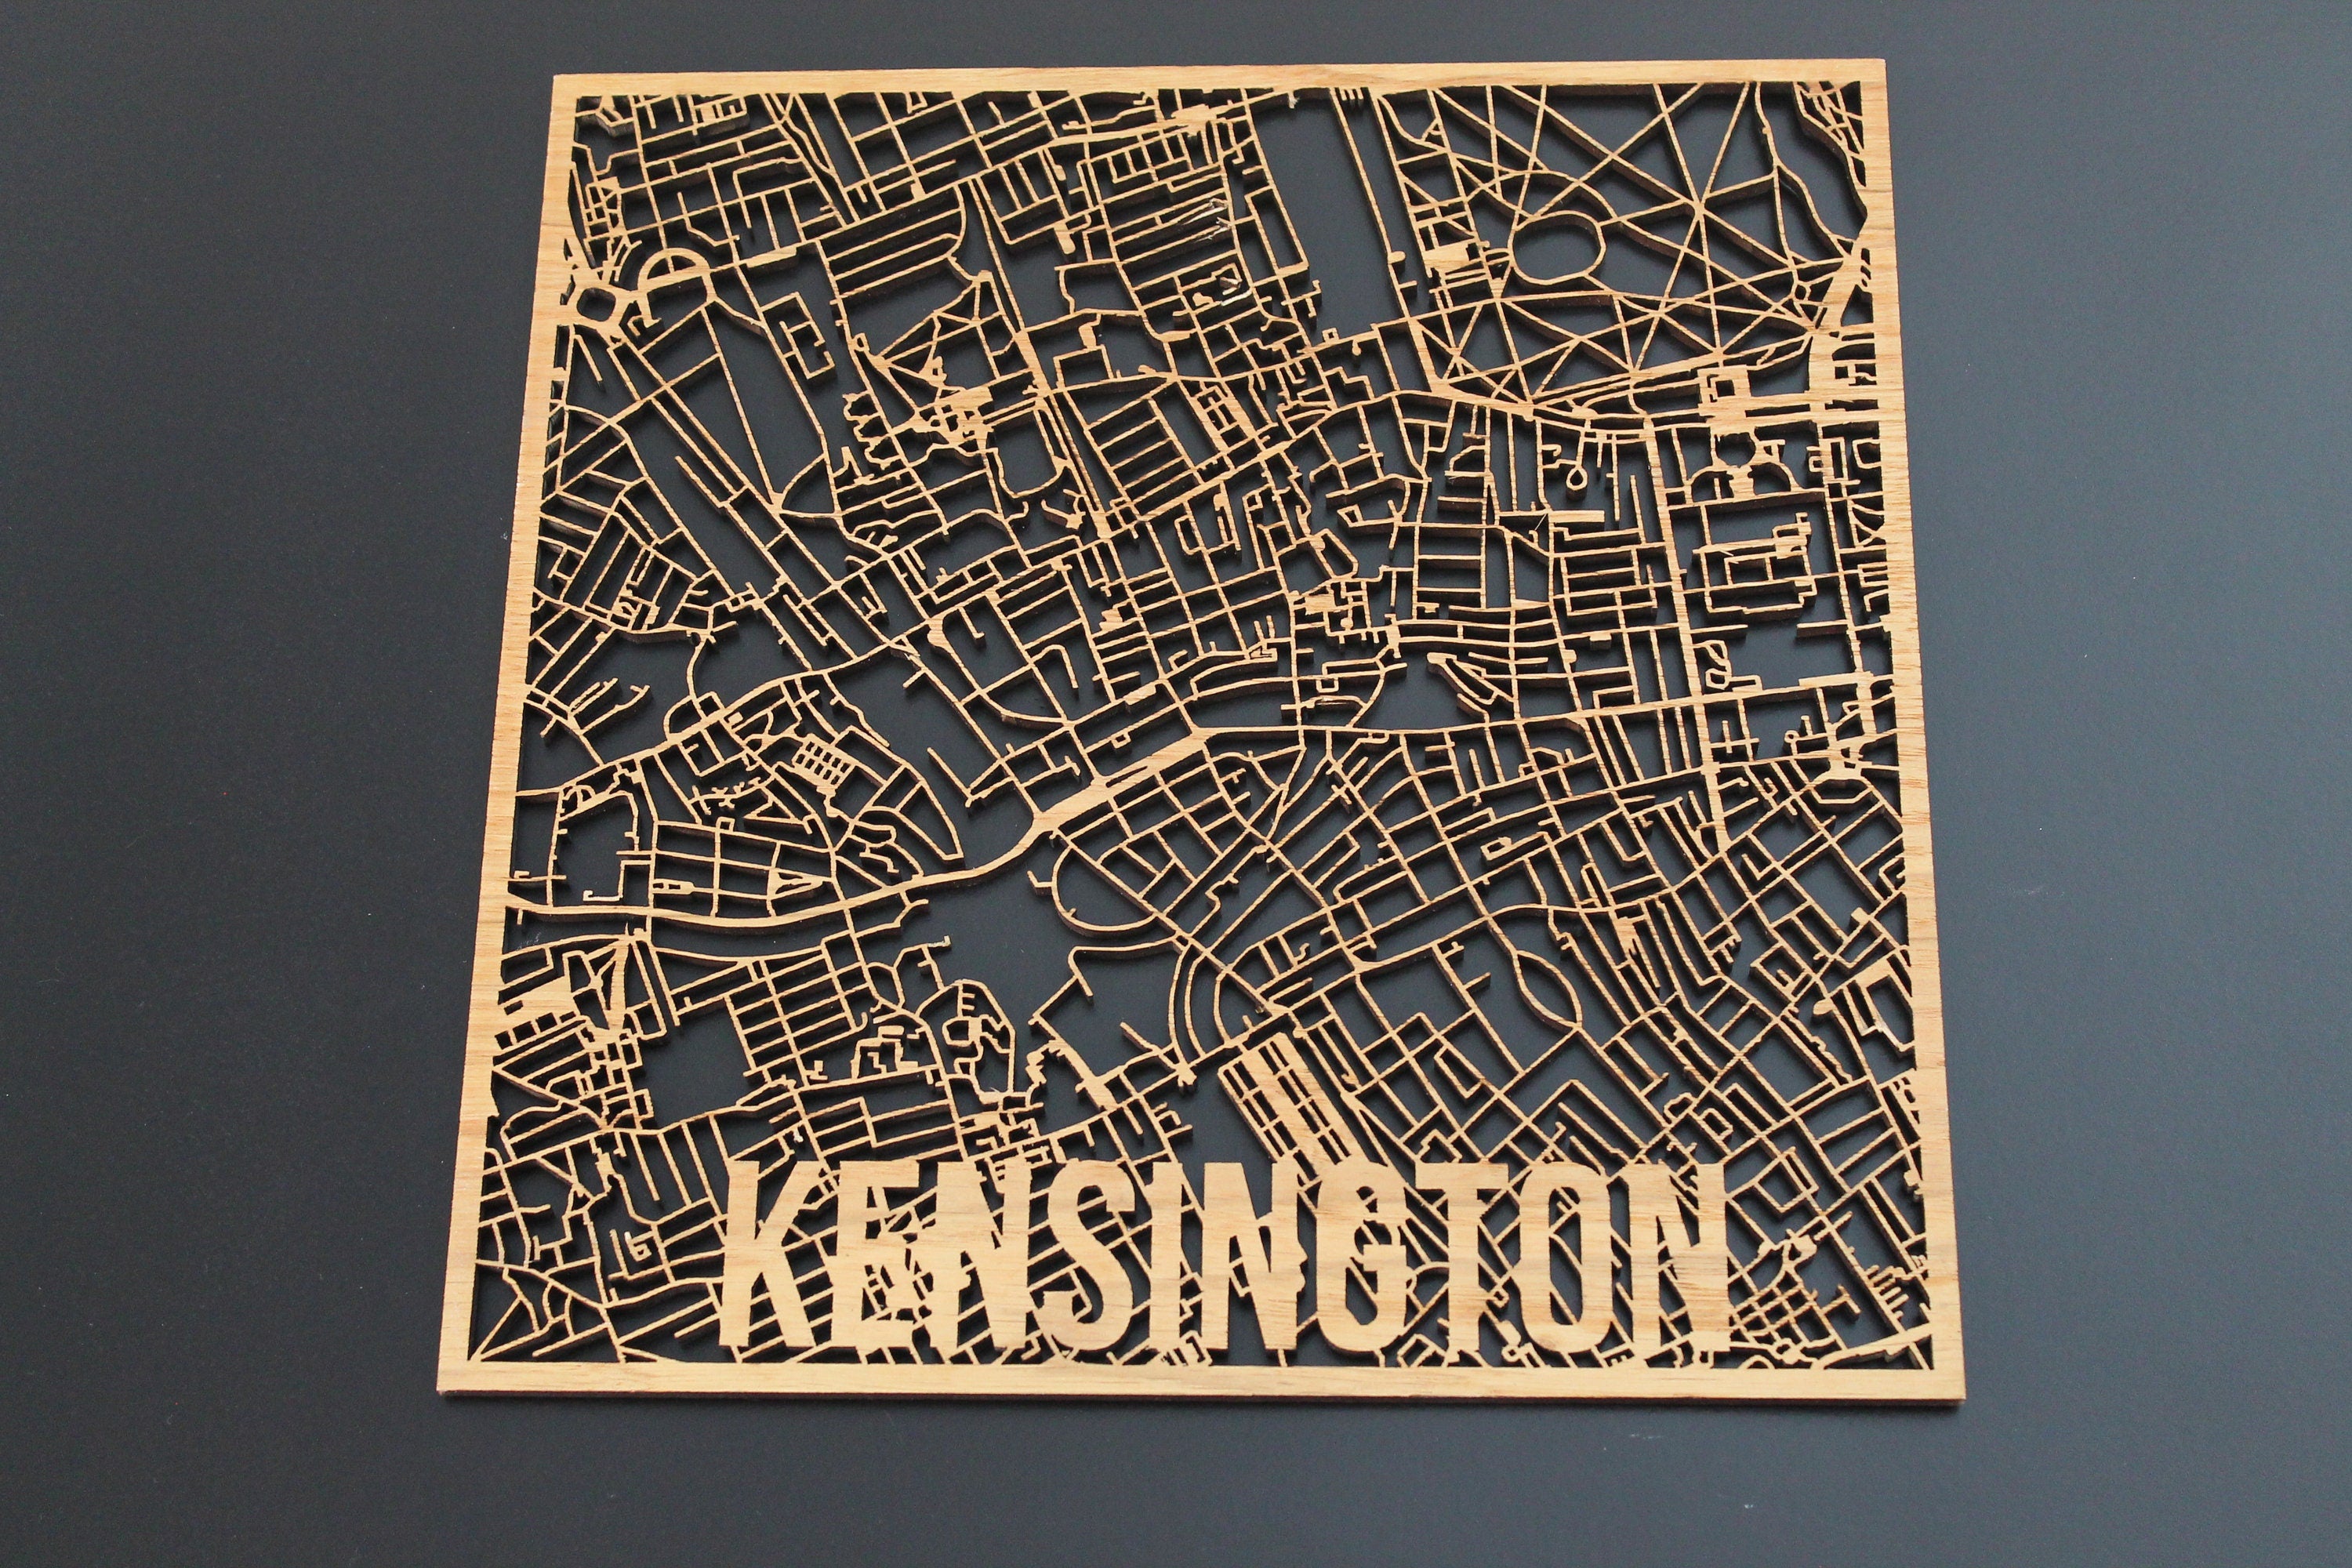 Kensington Solid Wood Laser Cut Street Maps Wooden Map